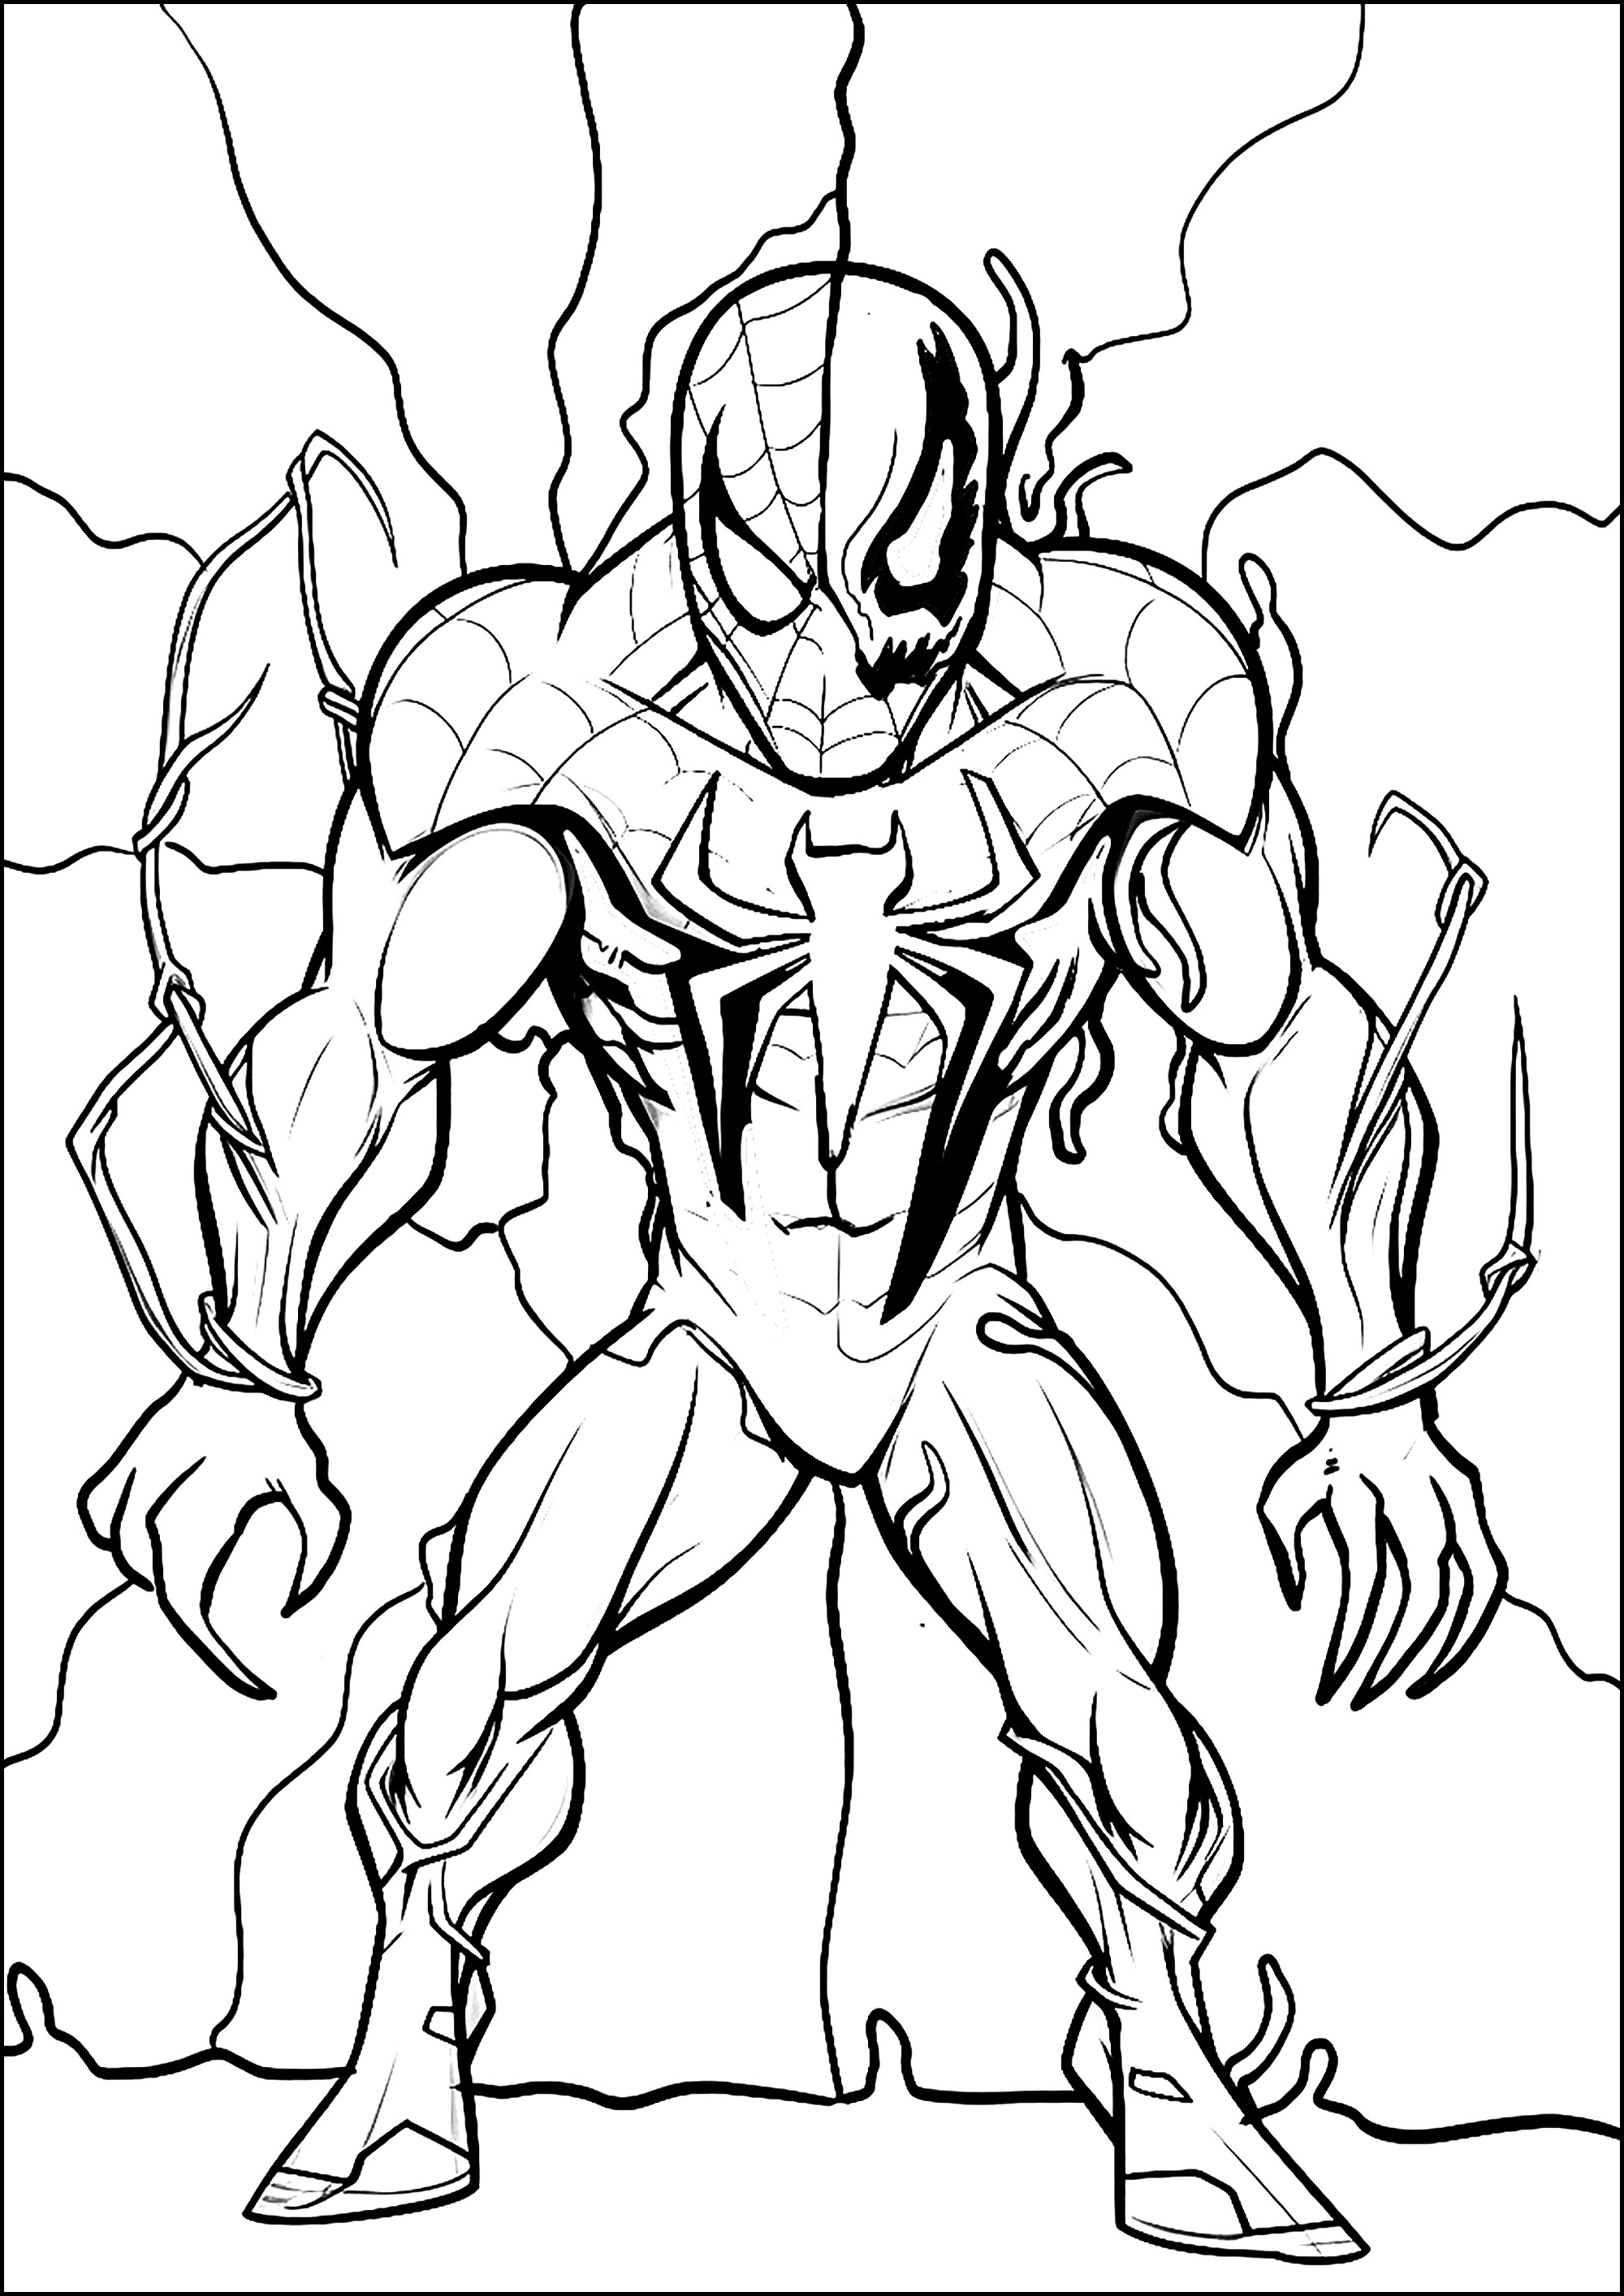 Spider-Man transforming into Venom - Venom Kids Coloring Pages